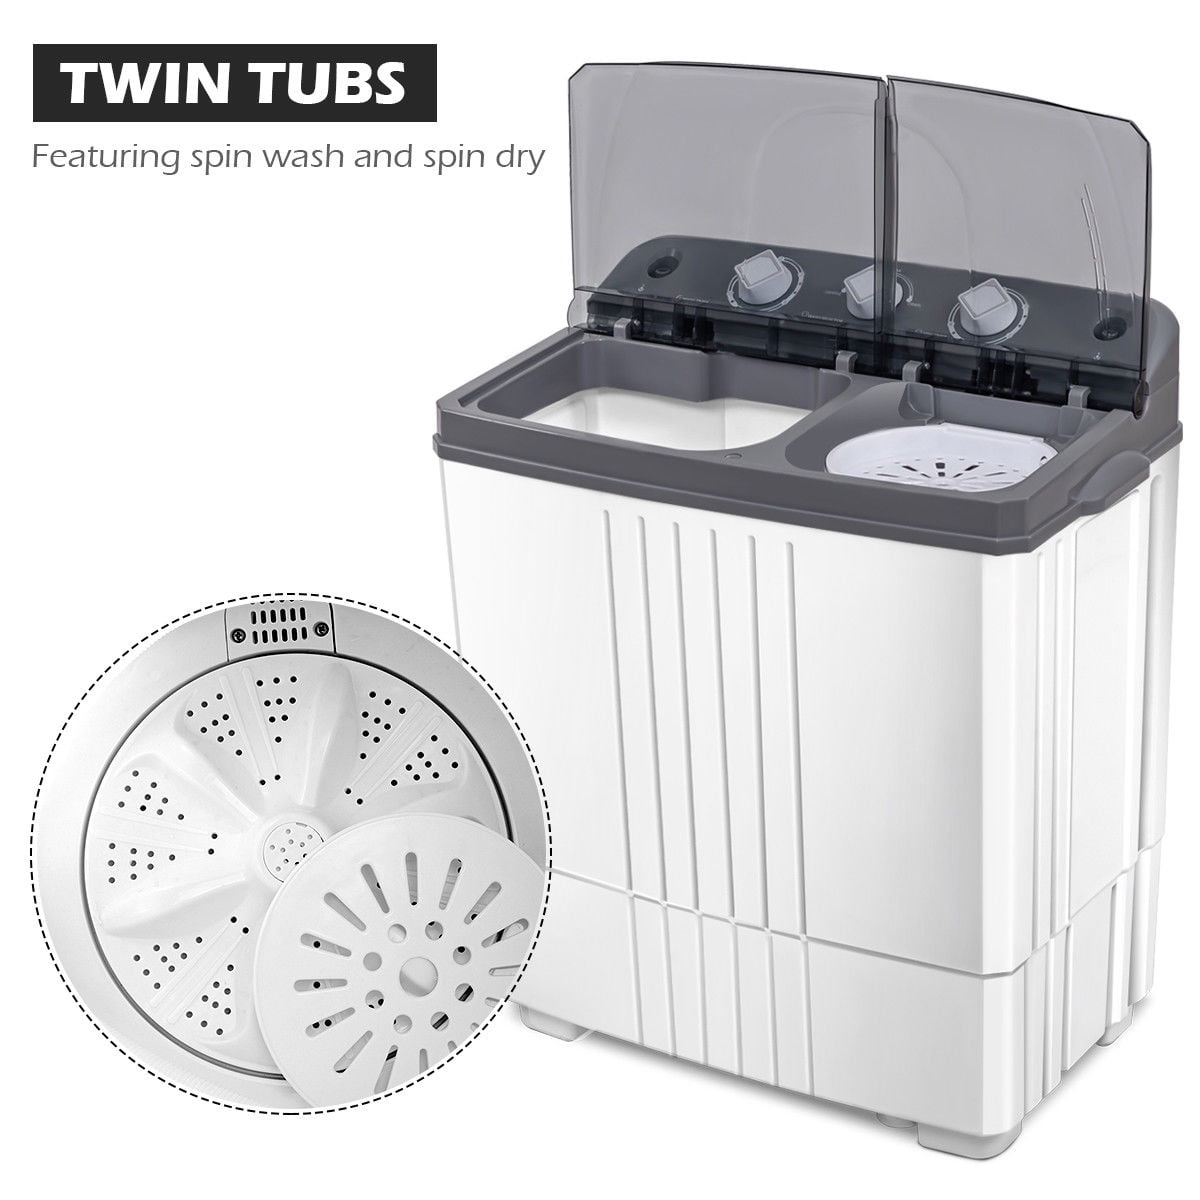 17.6lbs Portable Mini Compact Twin Tub Laundry Washing Machine Washer Spin Dryer 